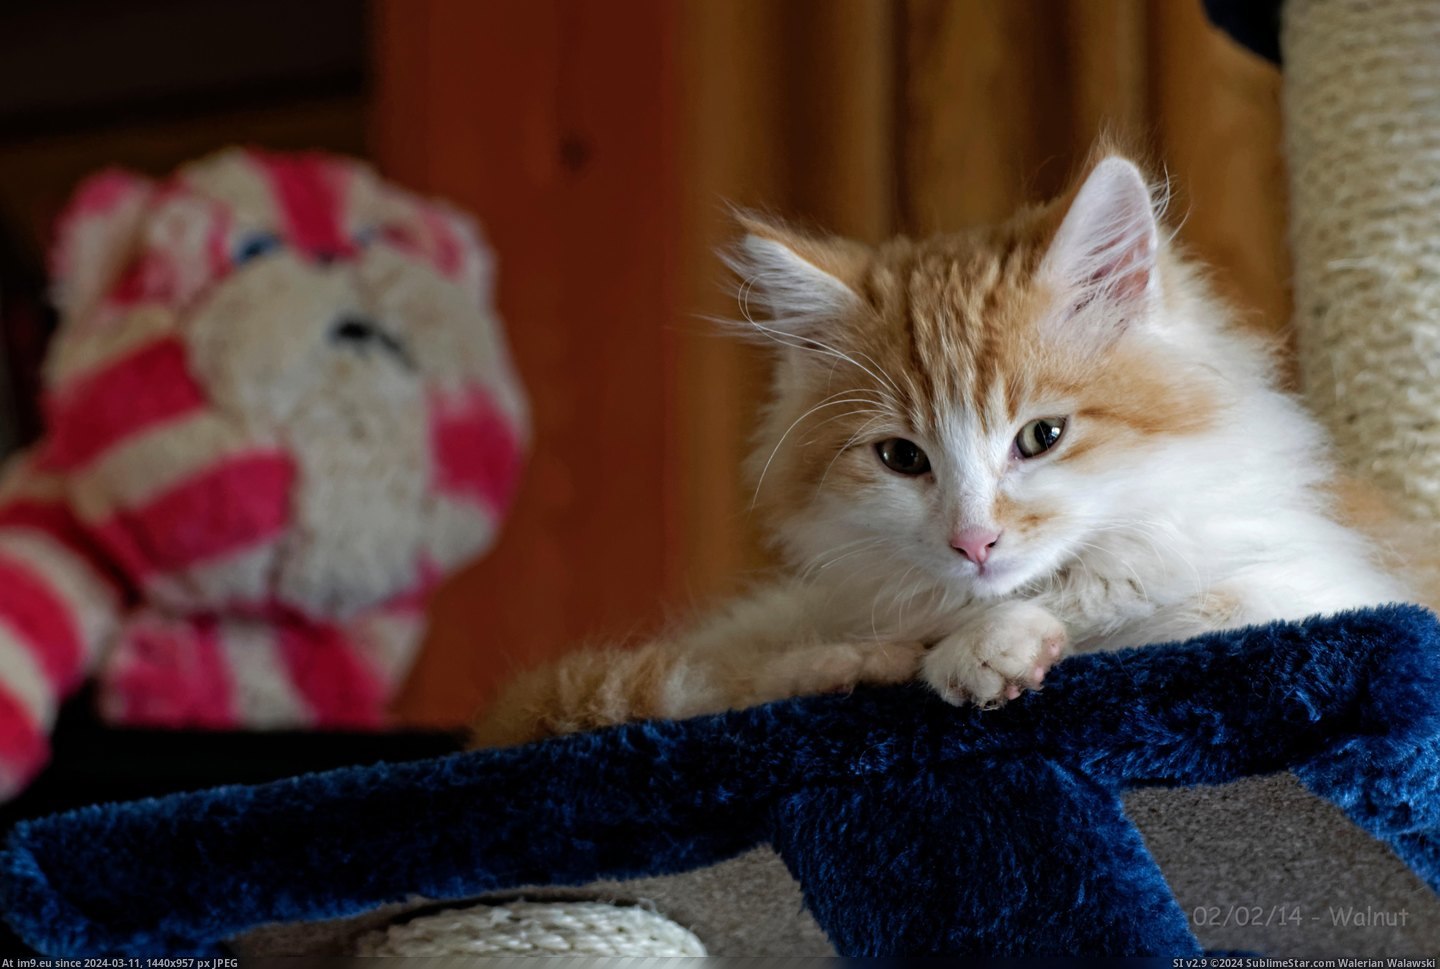 #Cats #Kitten #Walnut #Mistoffelees #Maine #Coon [Cats] My Maine Coon Kitten, Walnut Mistoffelees Pic. (Image of album My r/CATS favs))